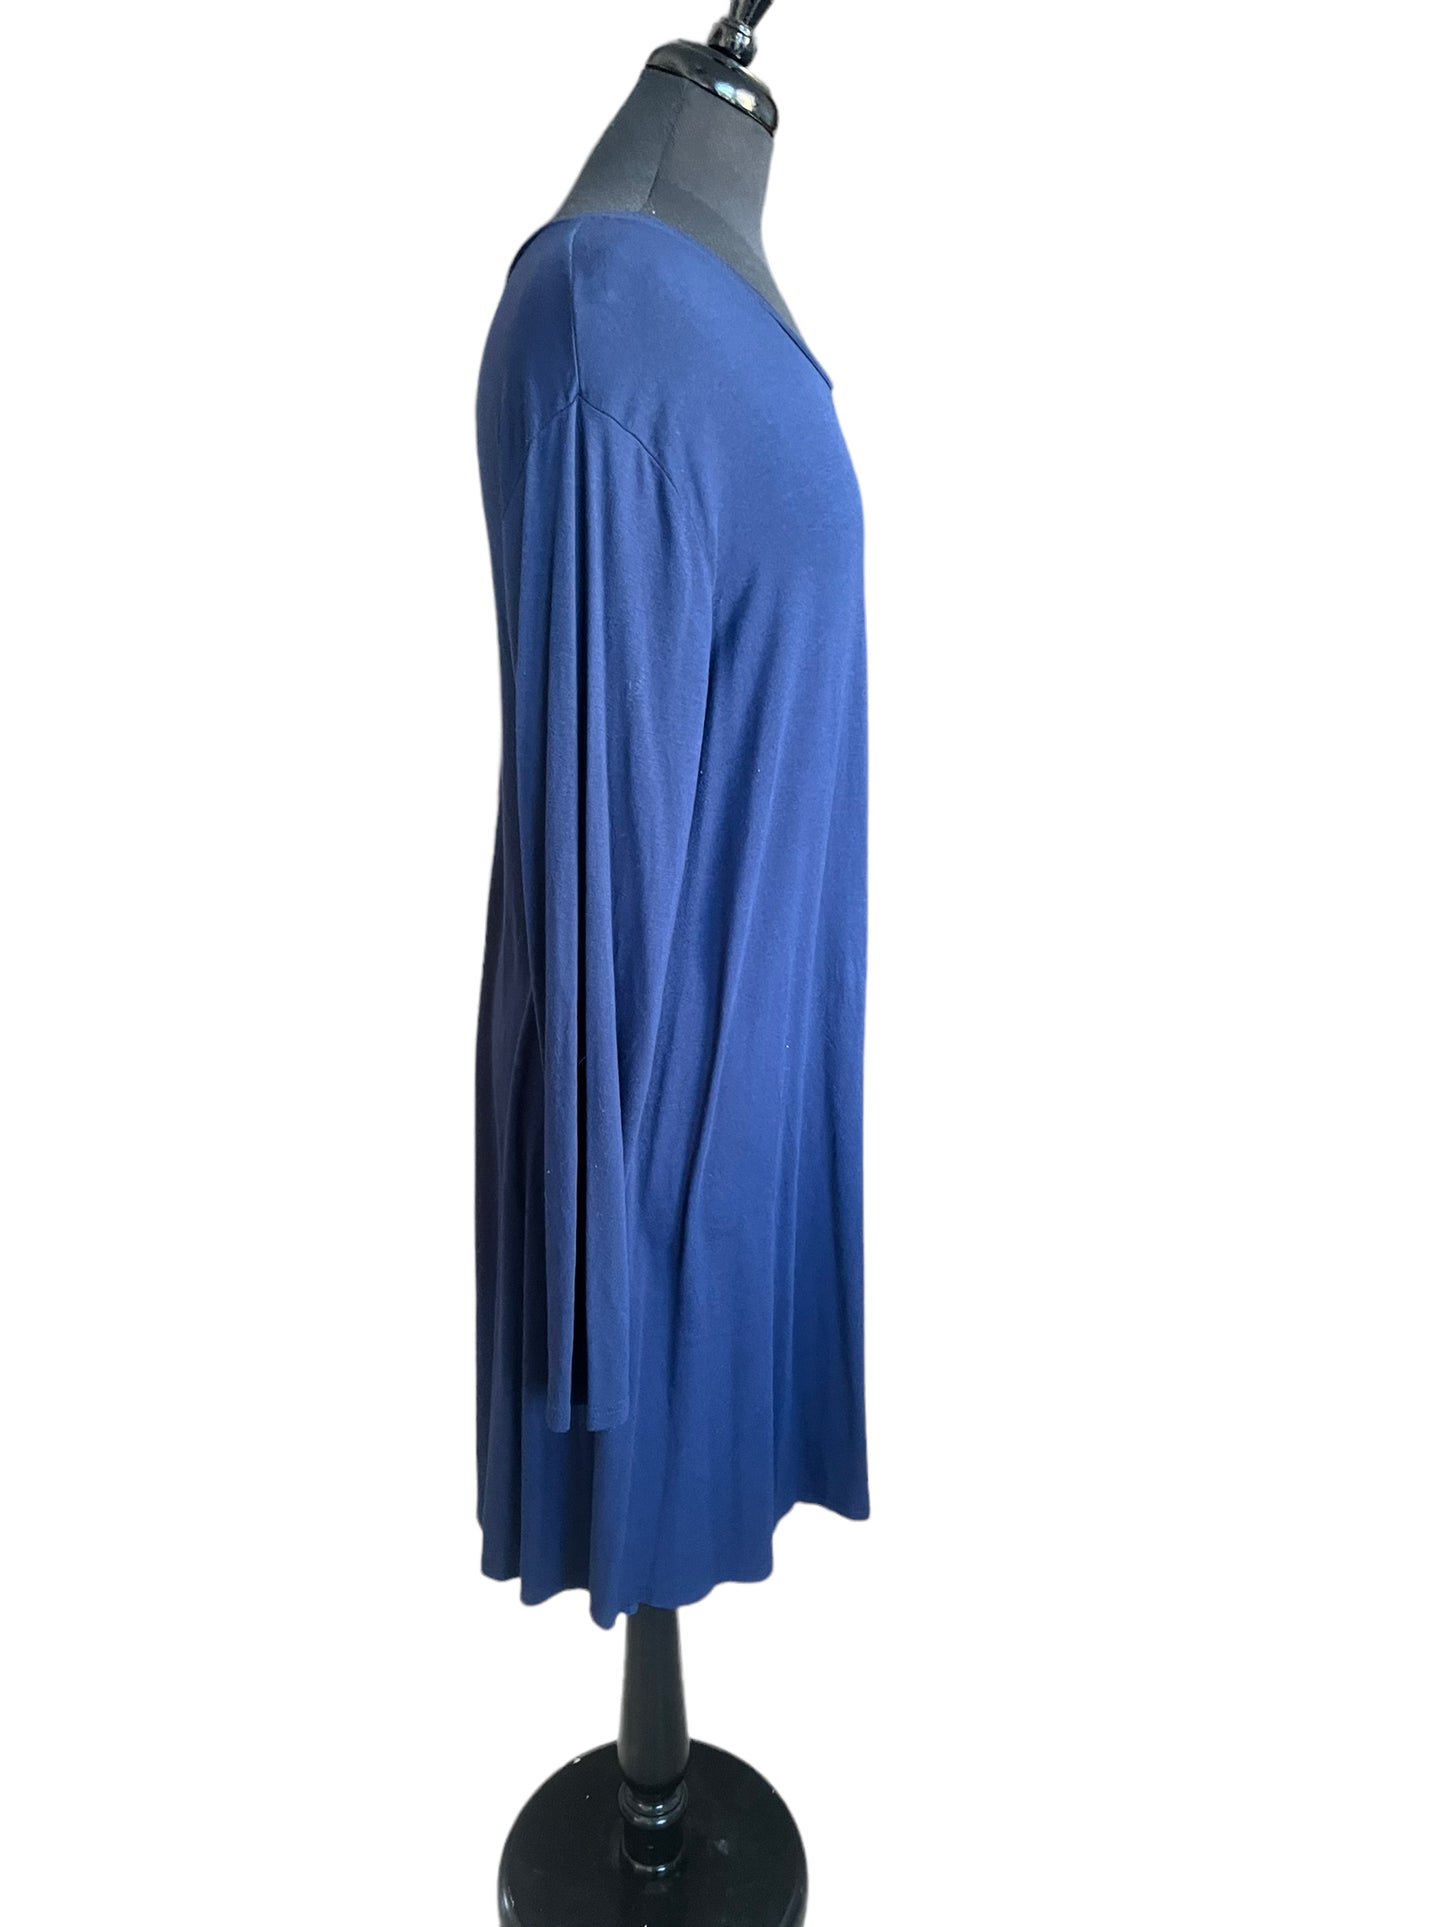 Brand Unknown Blue Dress